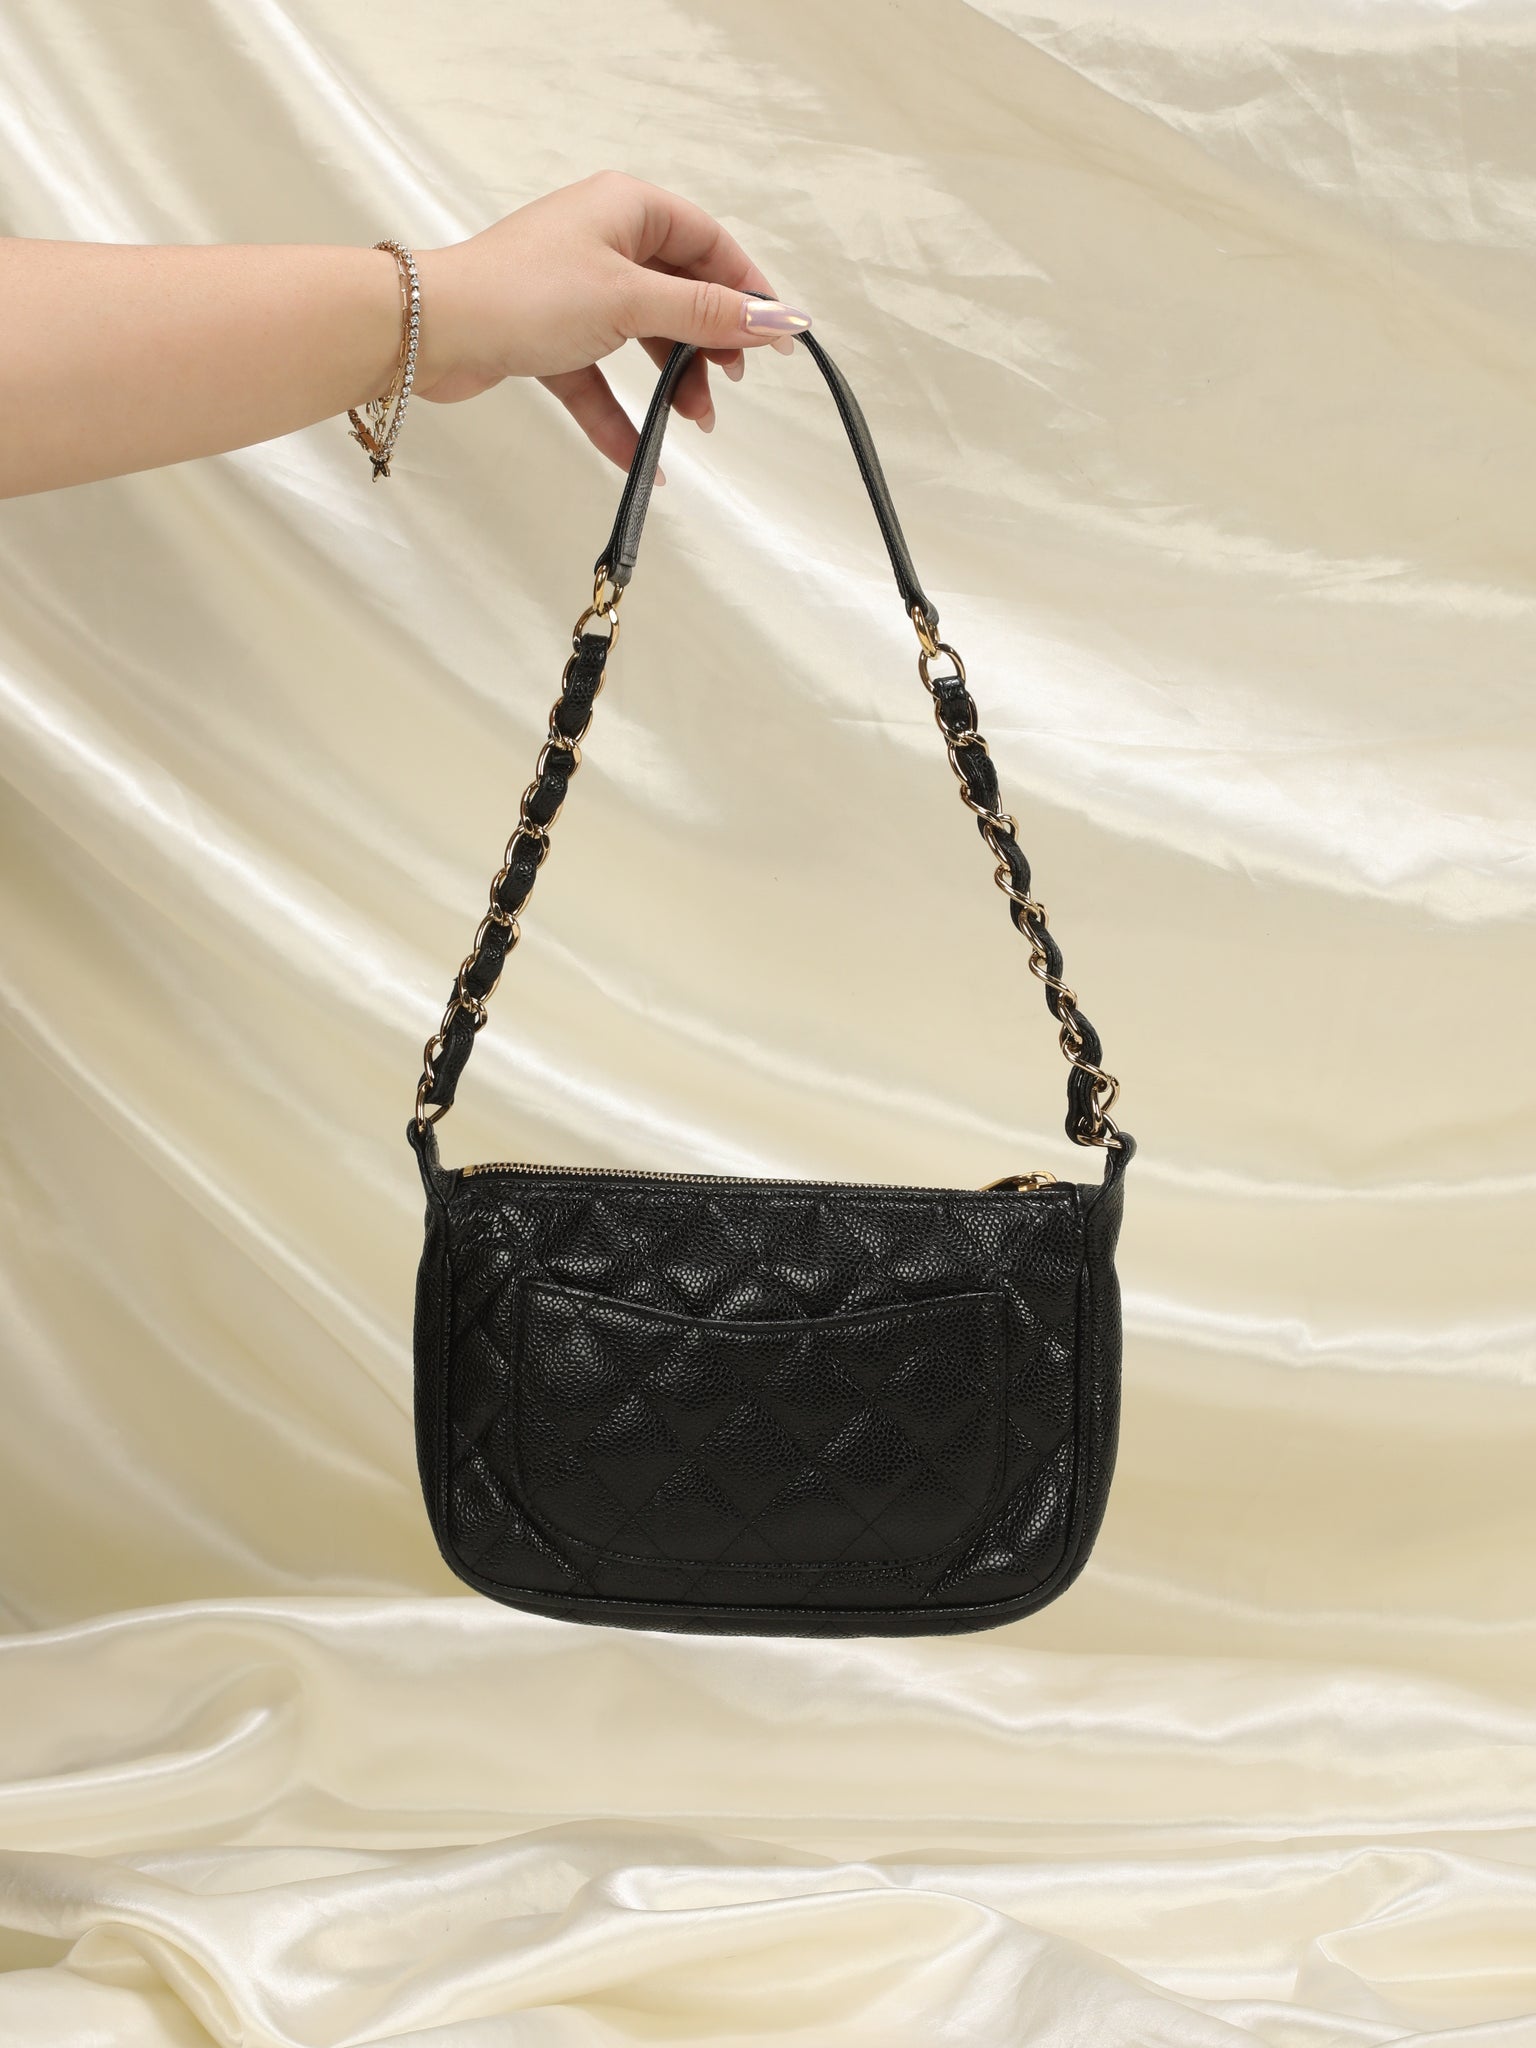 CHANEL, Bags, Chanel Mini Pochette Chain Handbag